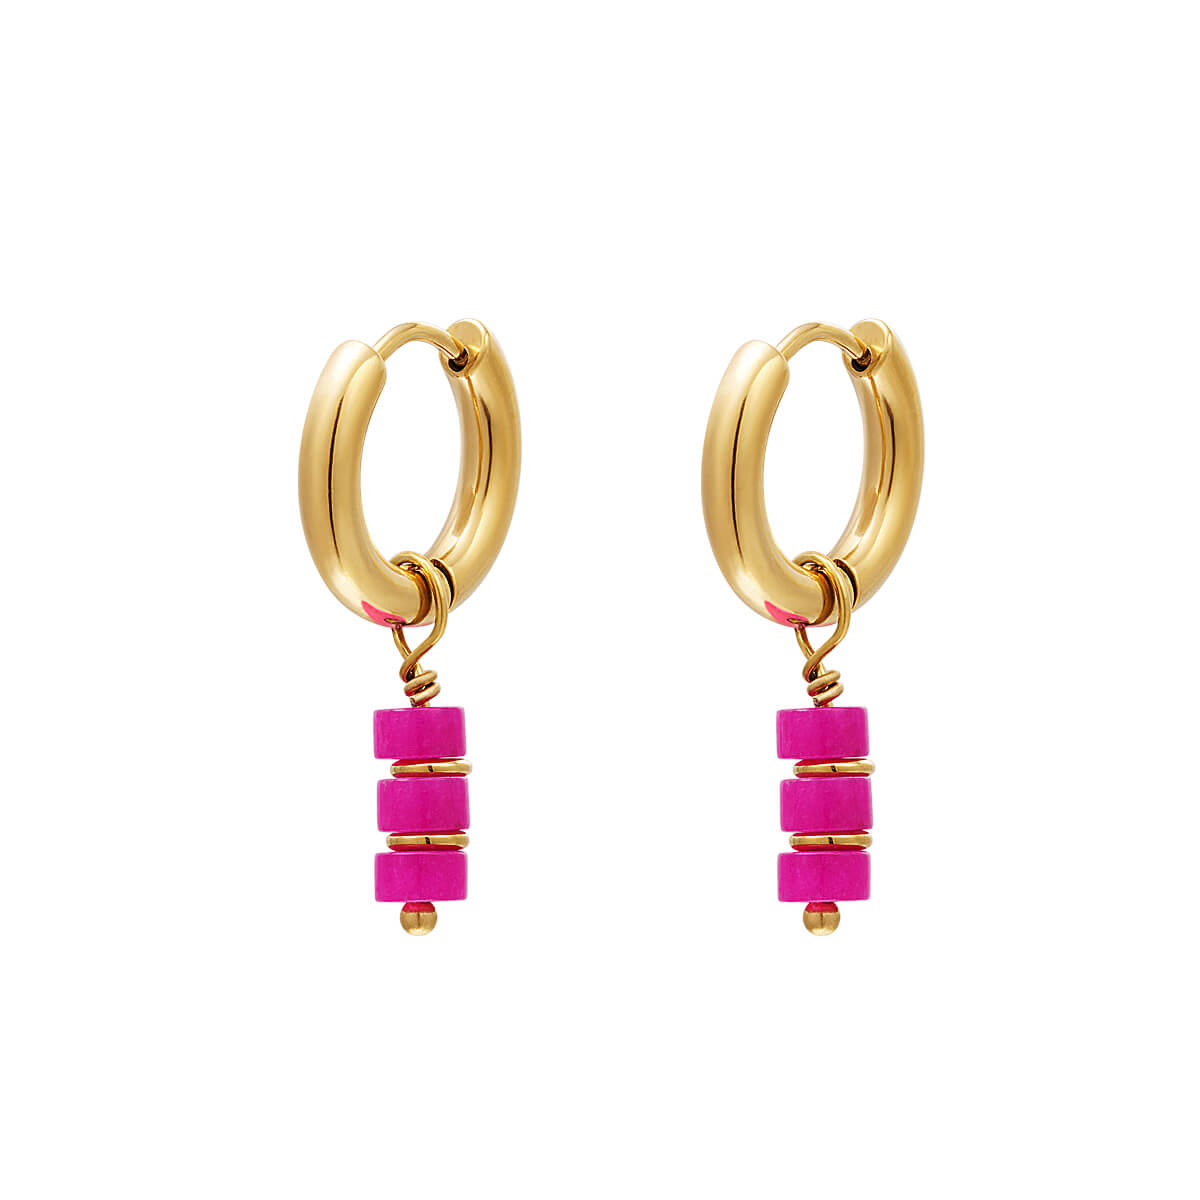 Colourful earrings